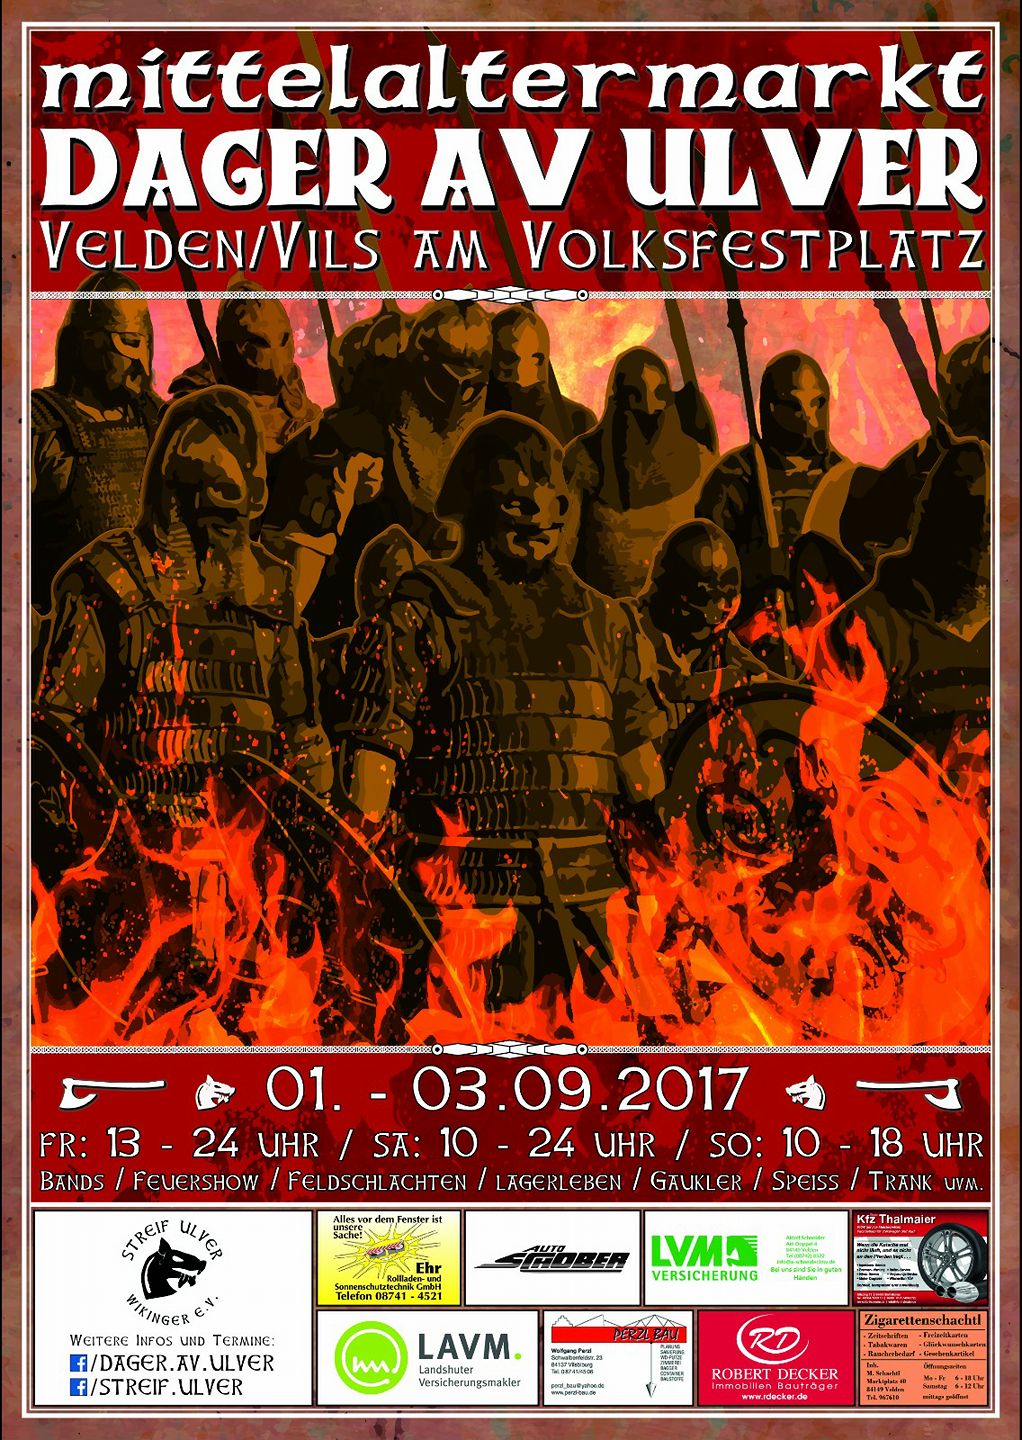 Plakat zum 2. Mittelaltermarkt in Velden